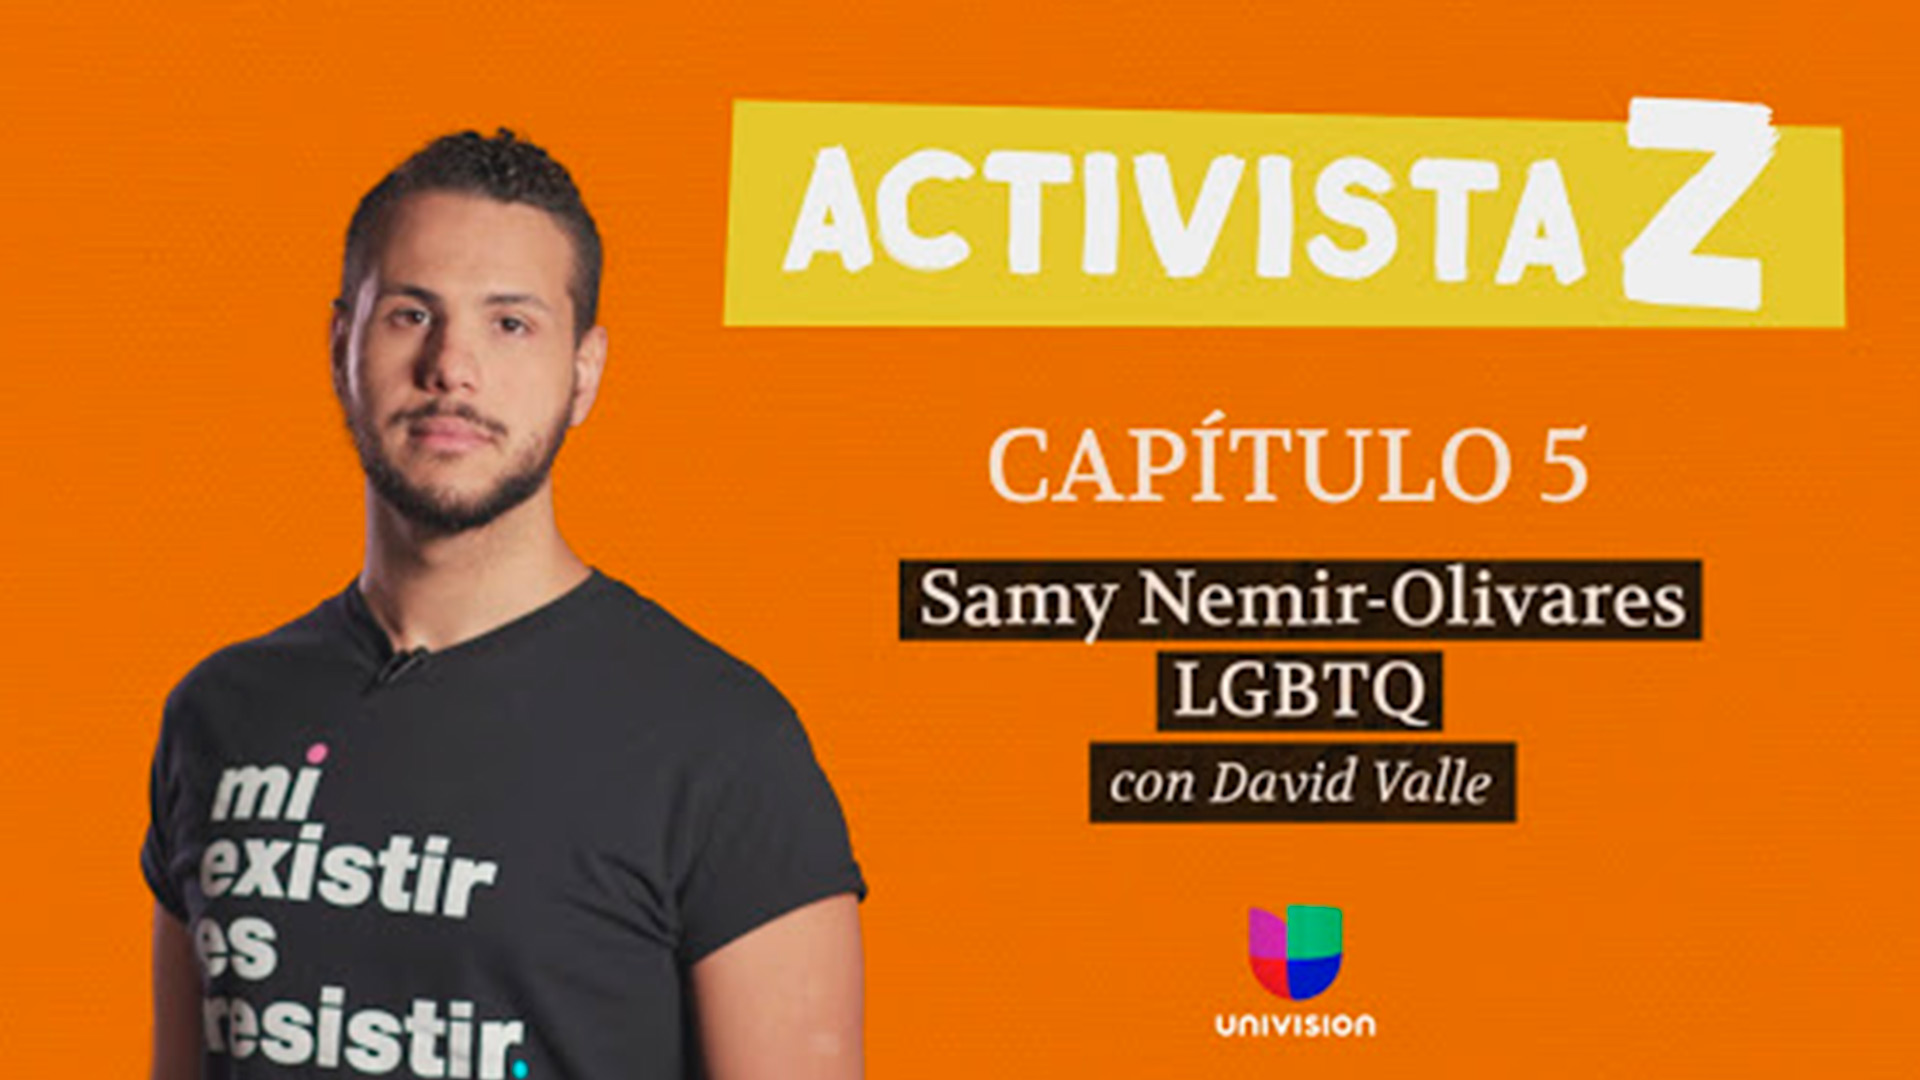 Univision ActivistaZ